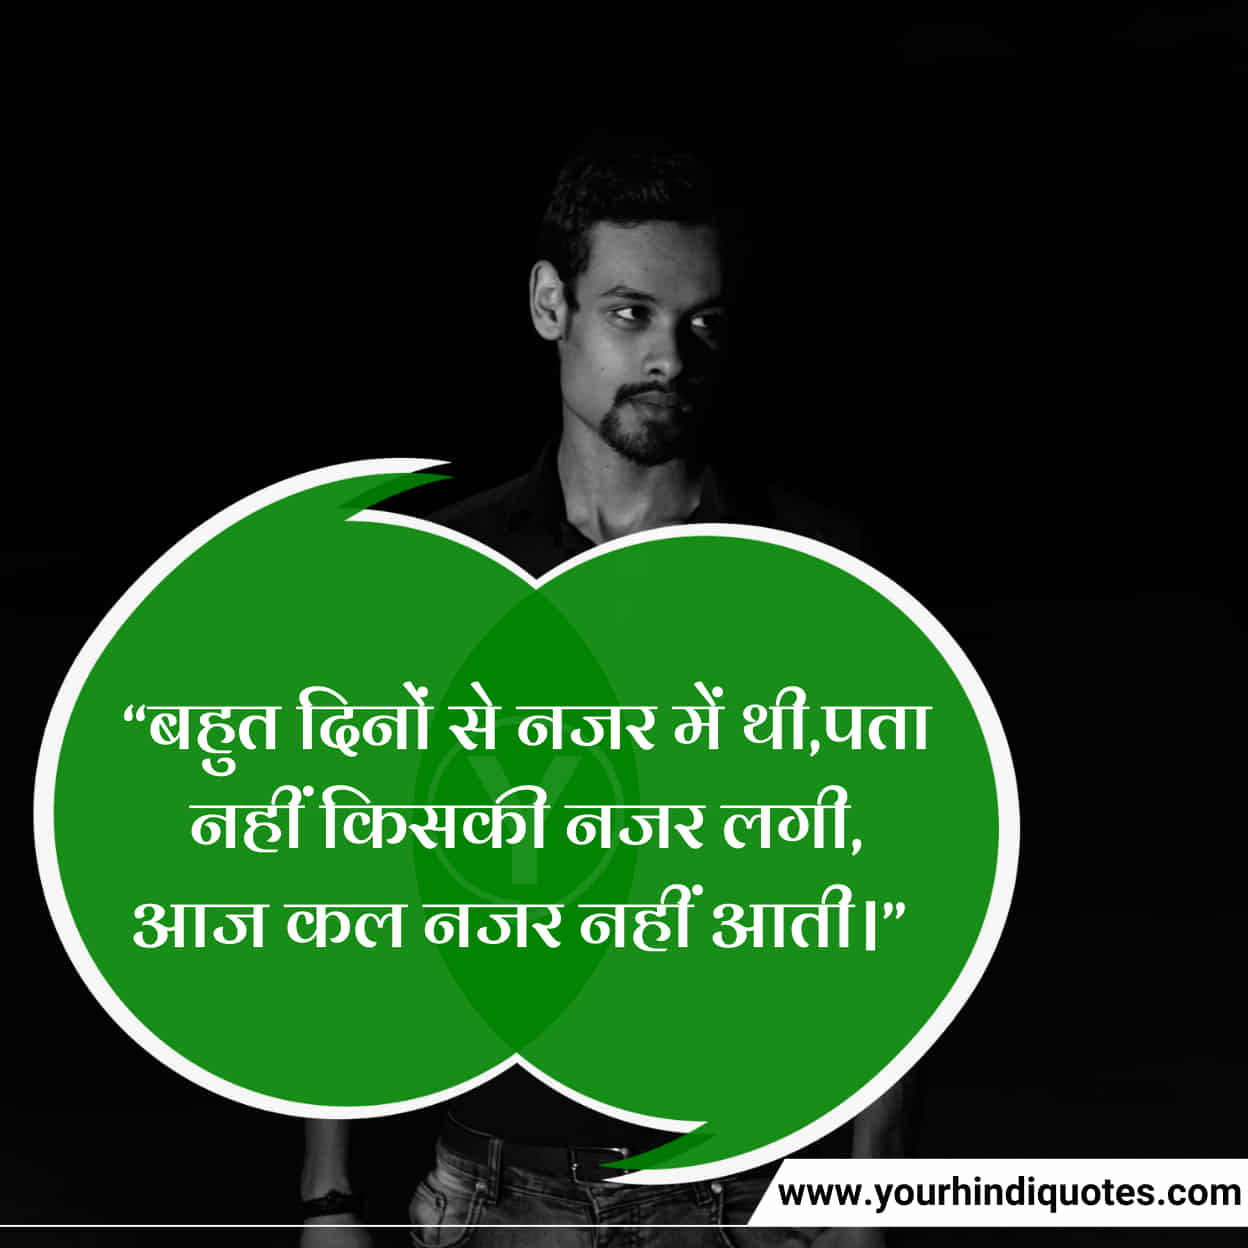 Latest Sad Quotes In Hindi